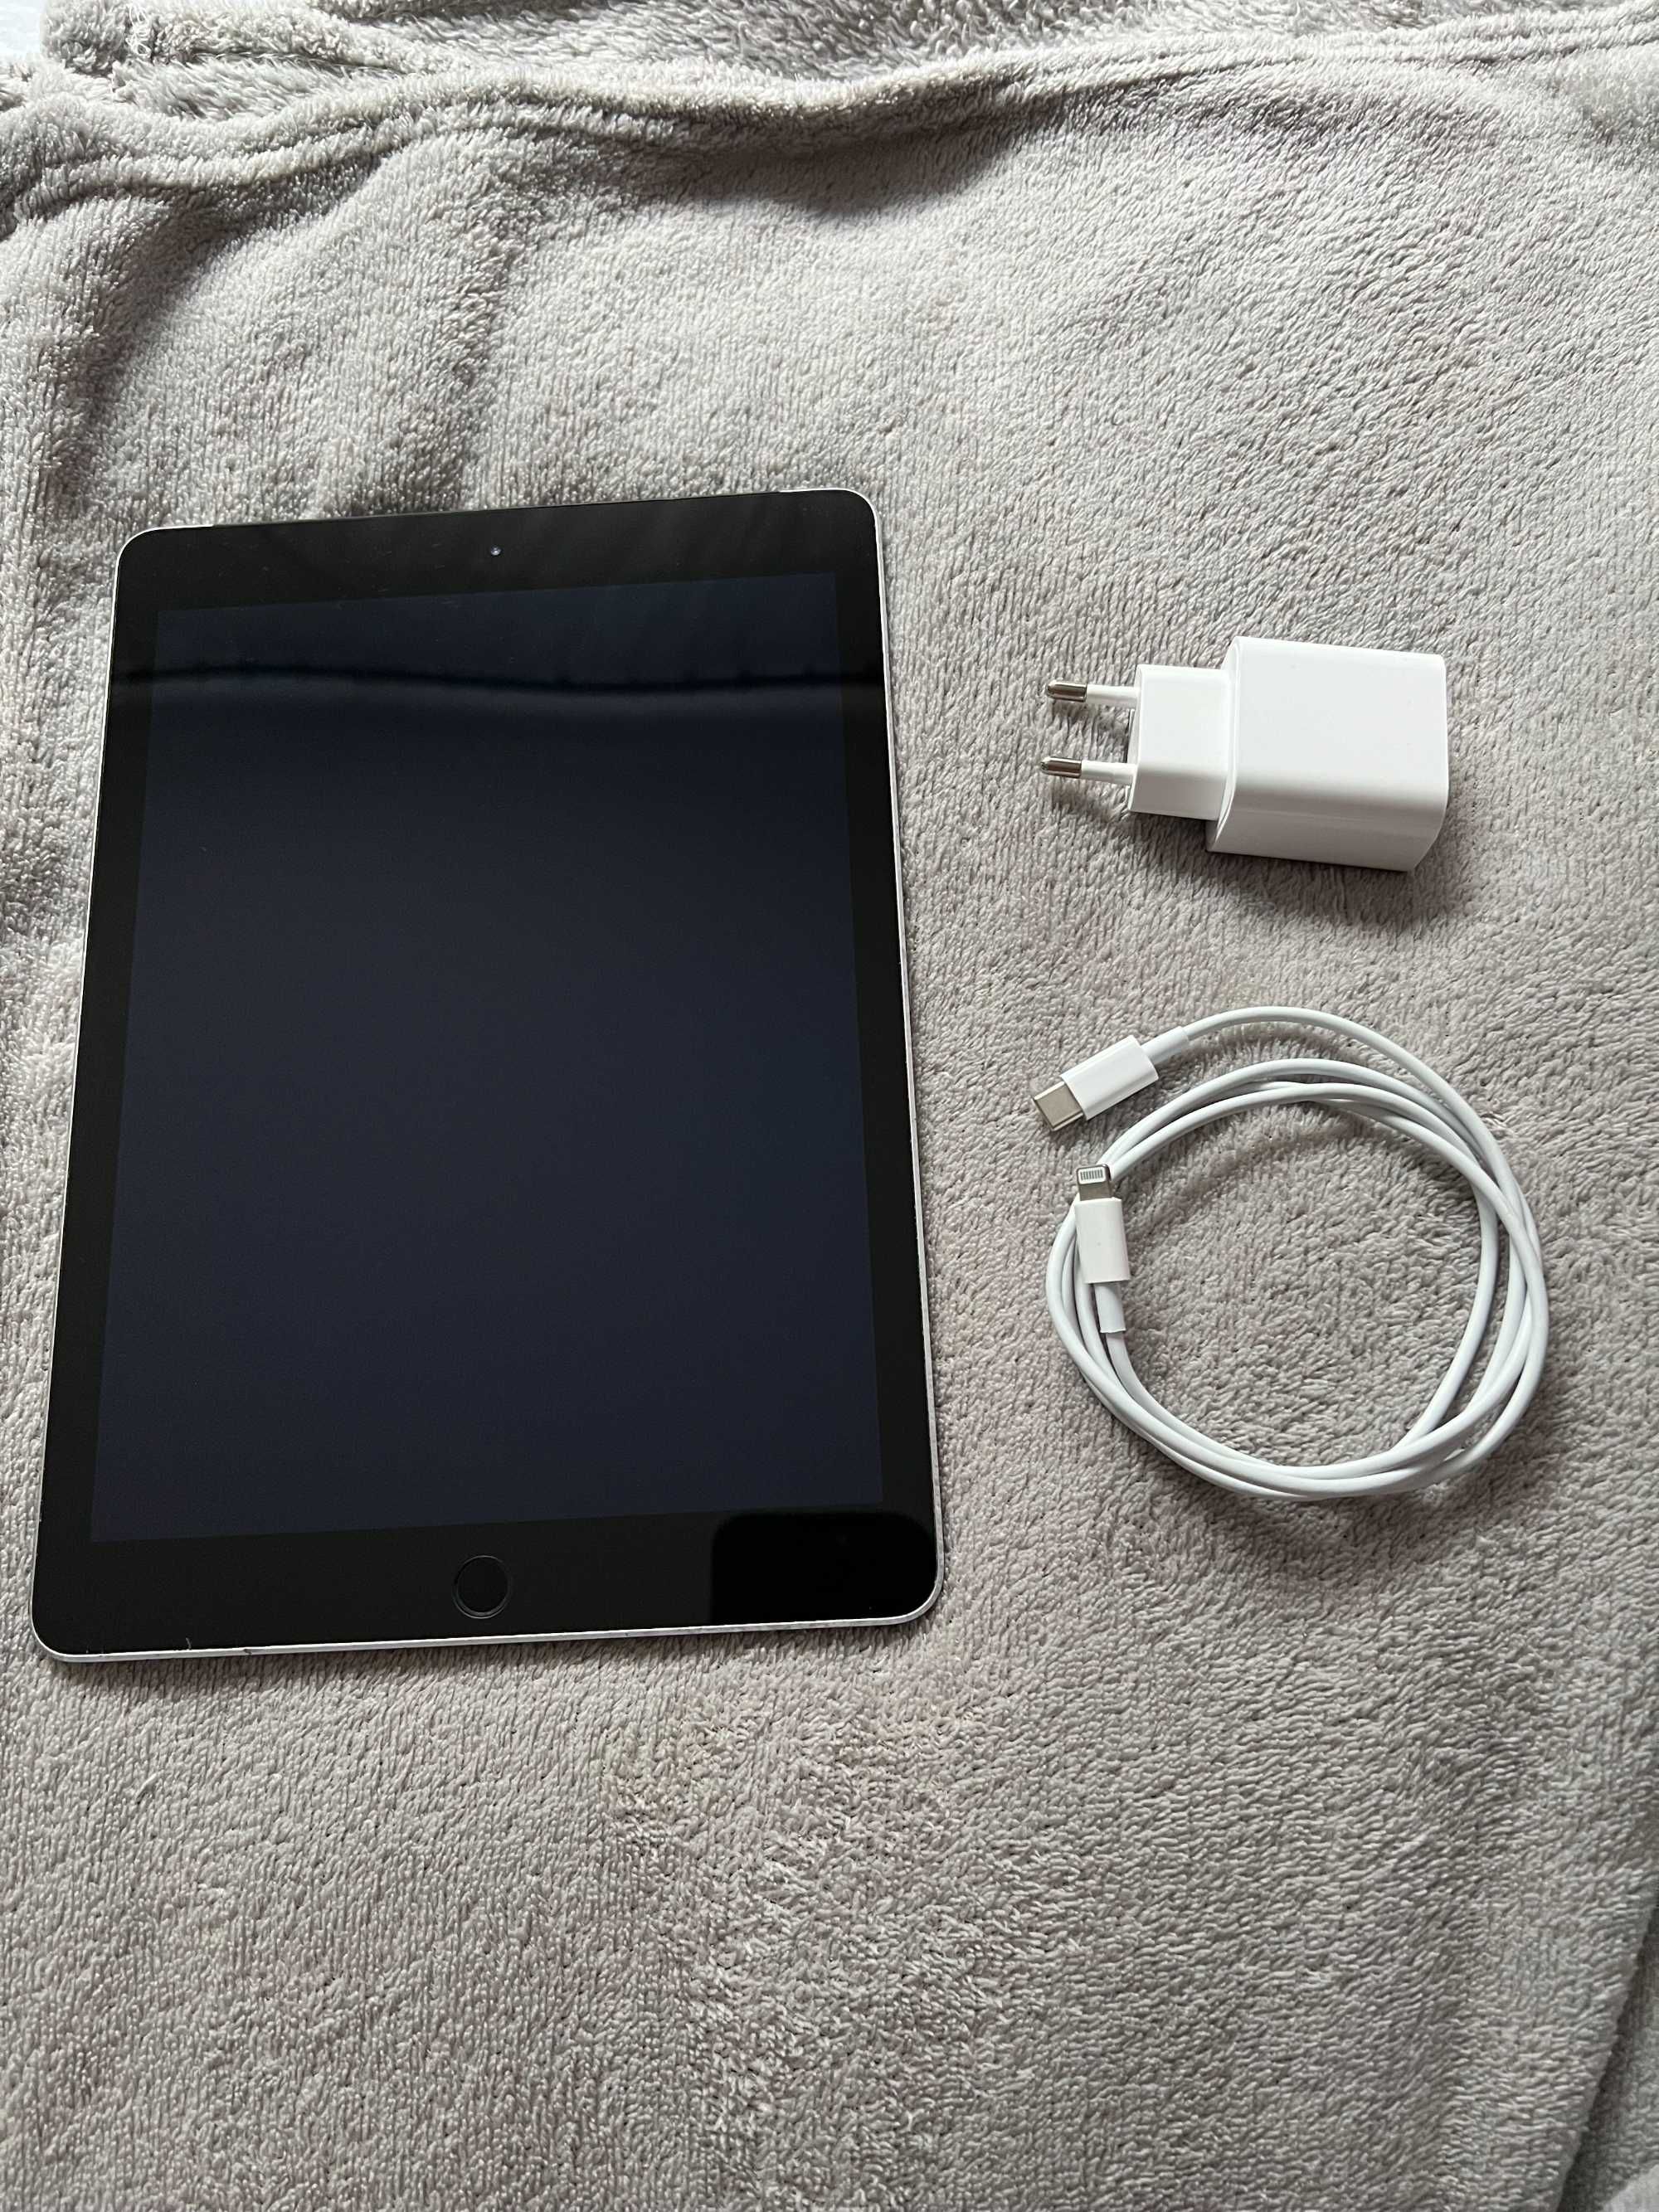 Apple iPad Air 2, 16GB Wifi+Cellular Space Gray